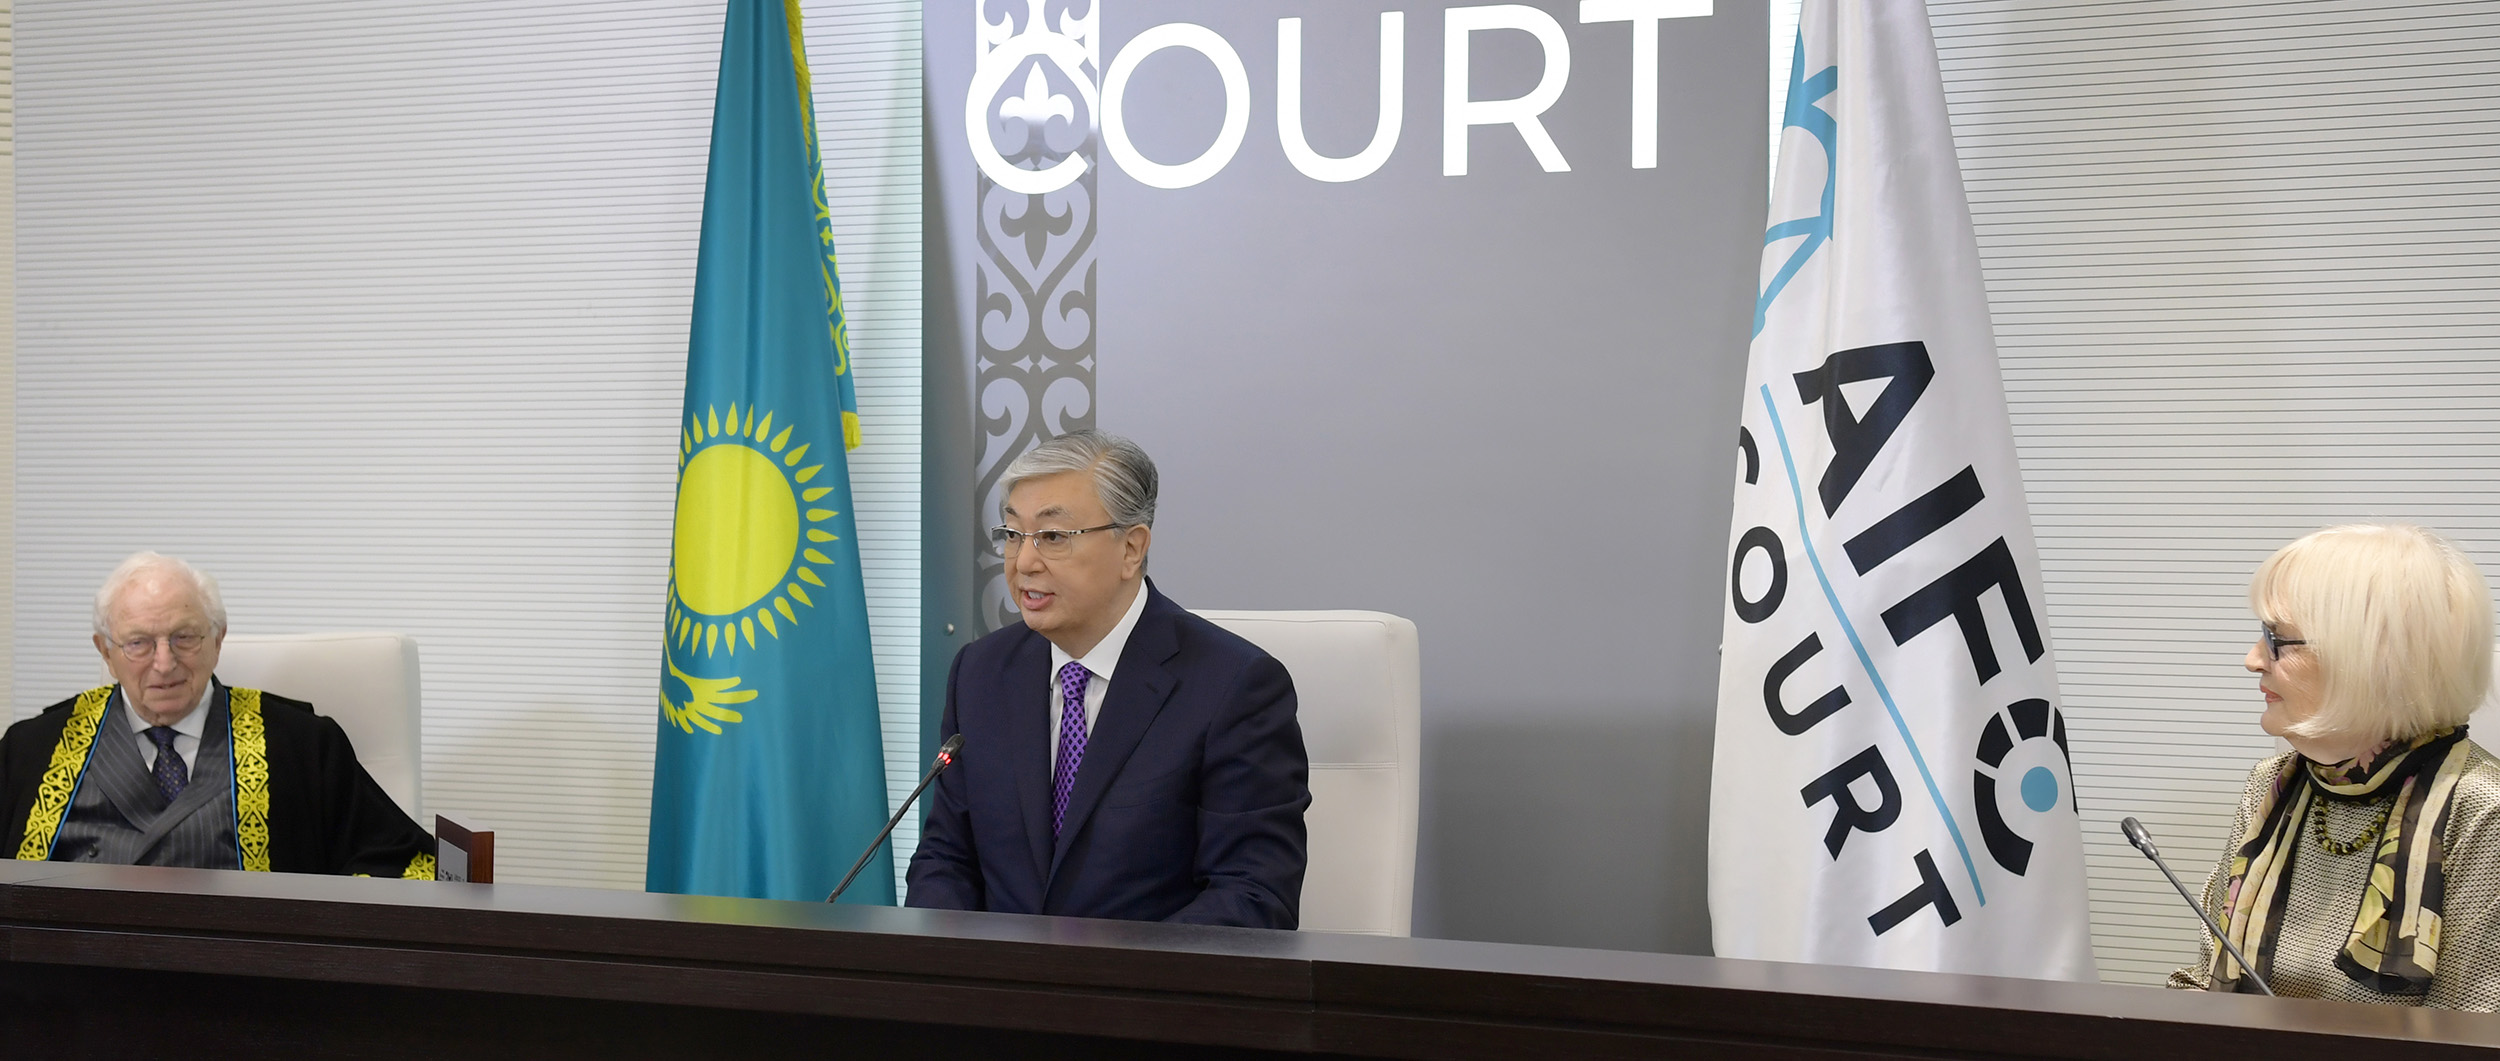 Президент открыл здание Суда МФЦА и Международного арбитражного центра